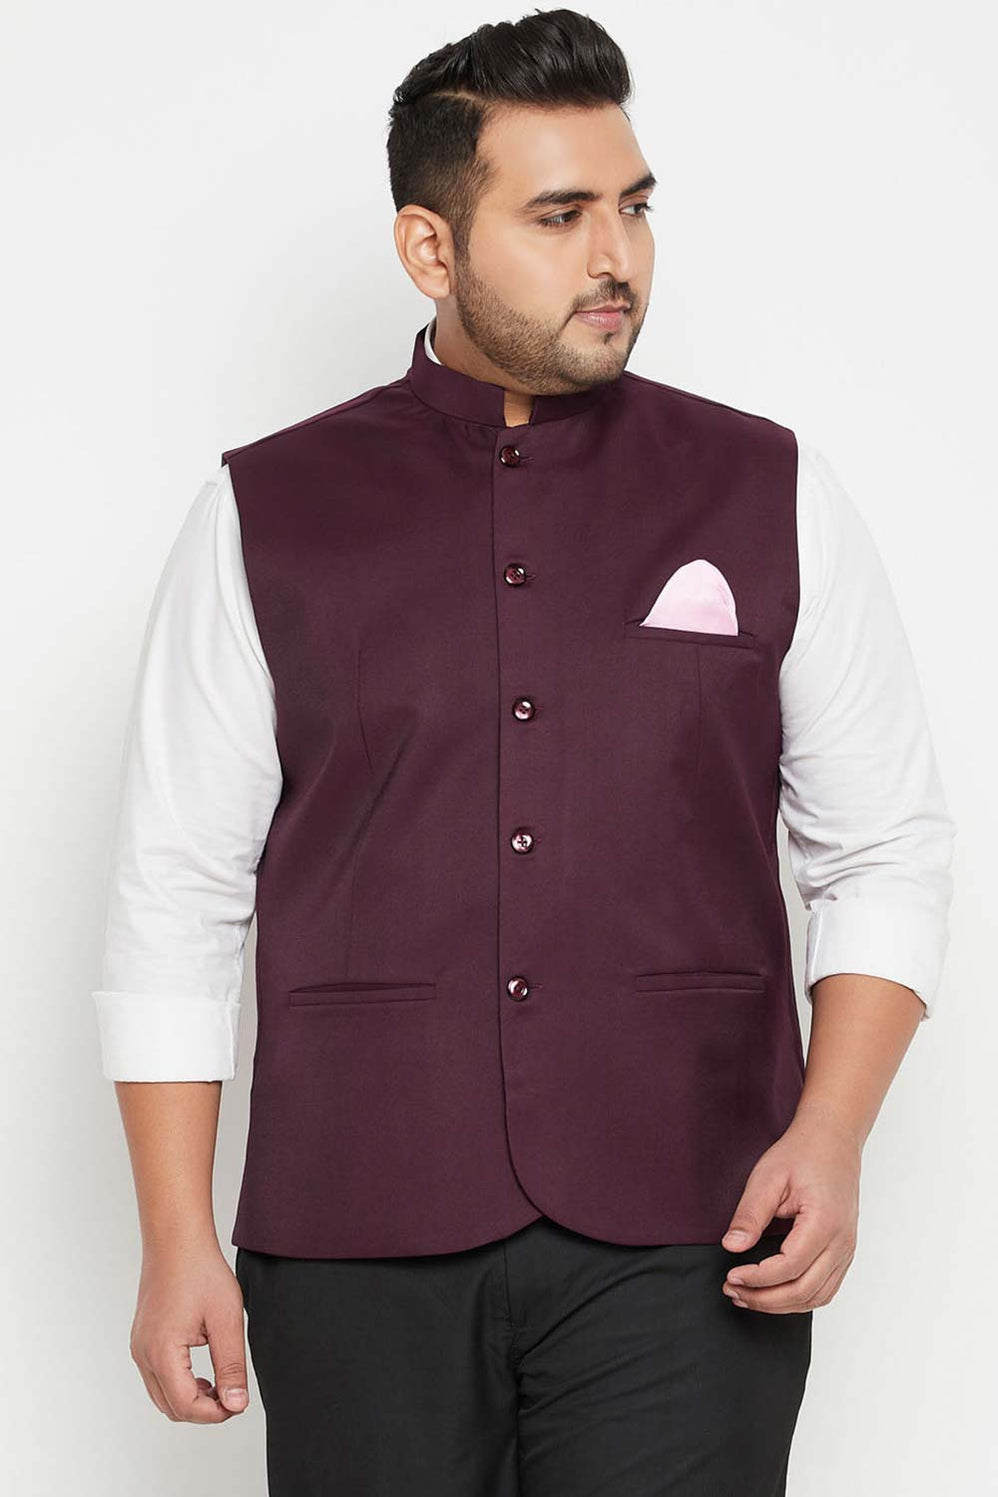 Shop Indian Wedding Menswear and Designer Suits | Karmaplace ...